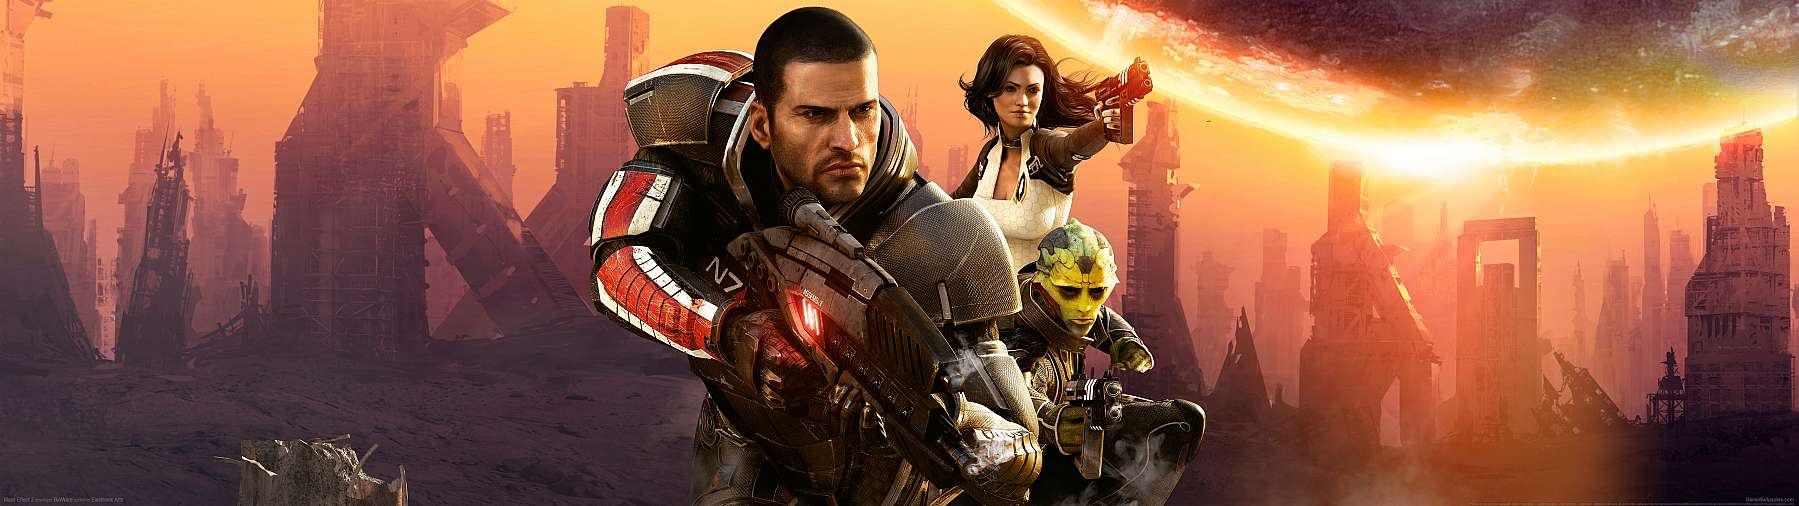 Mass Effect 2 superwide achtergrond 08